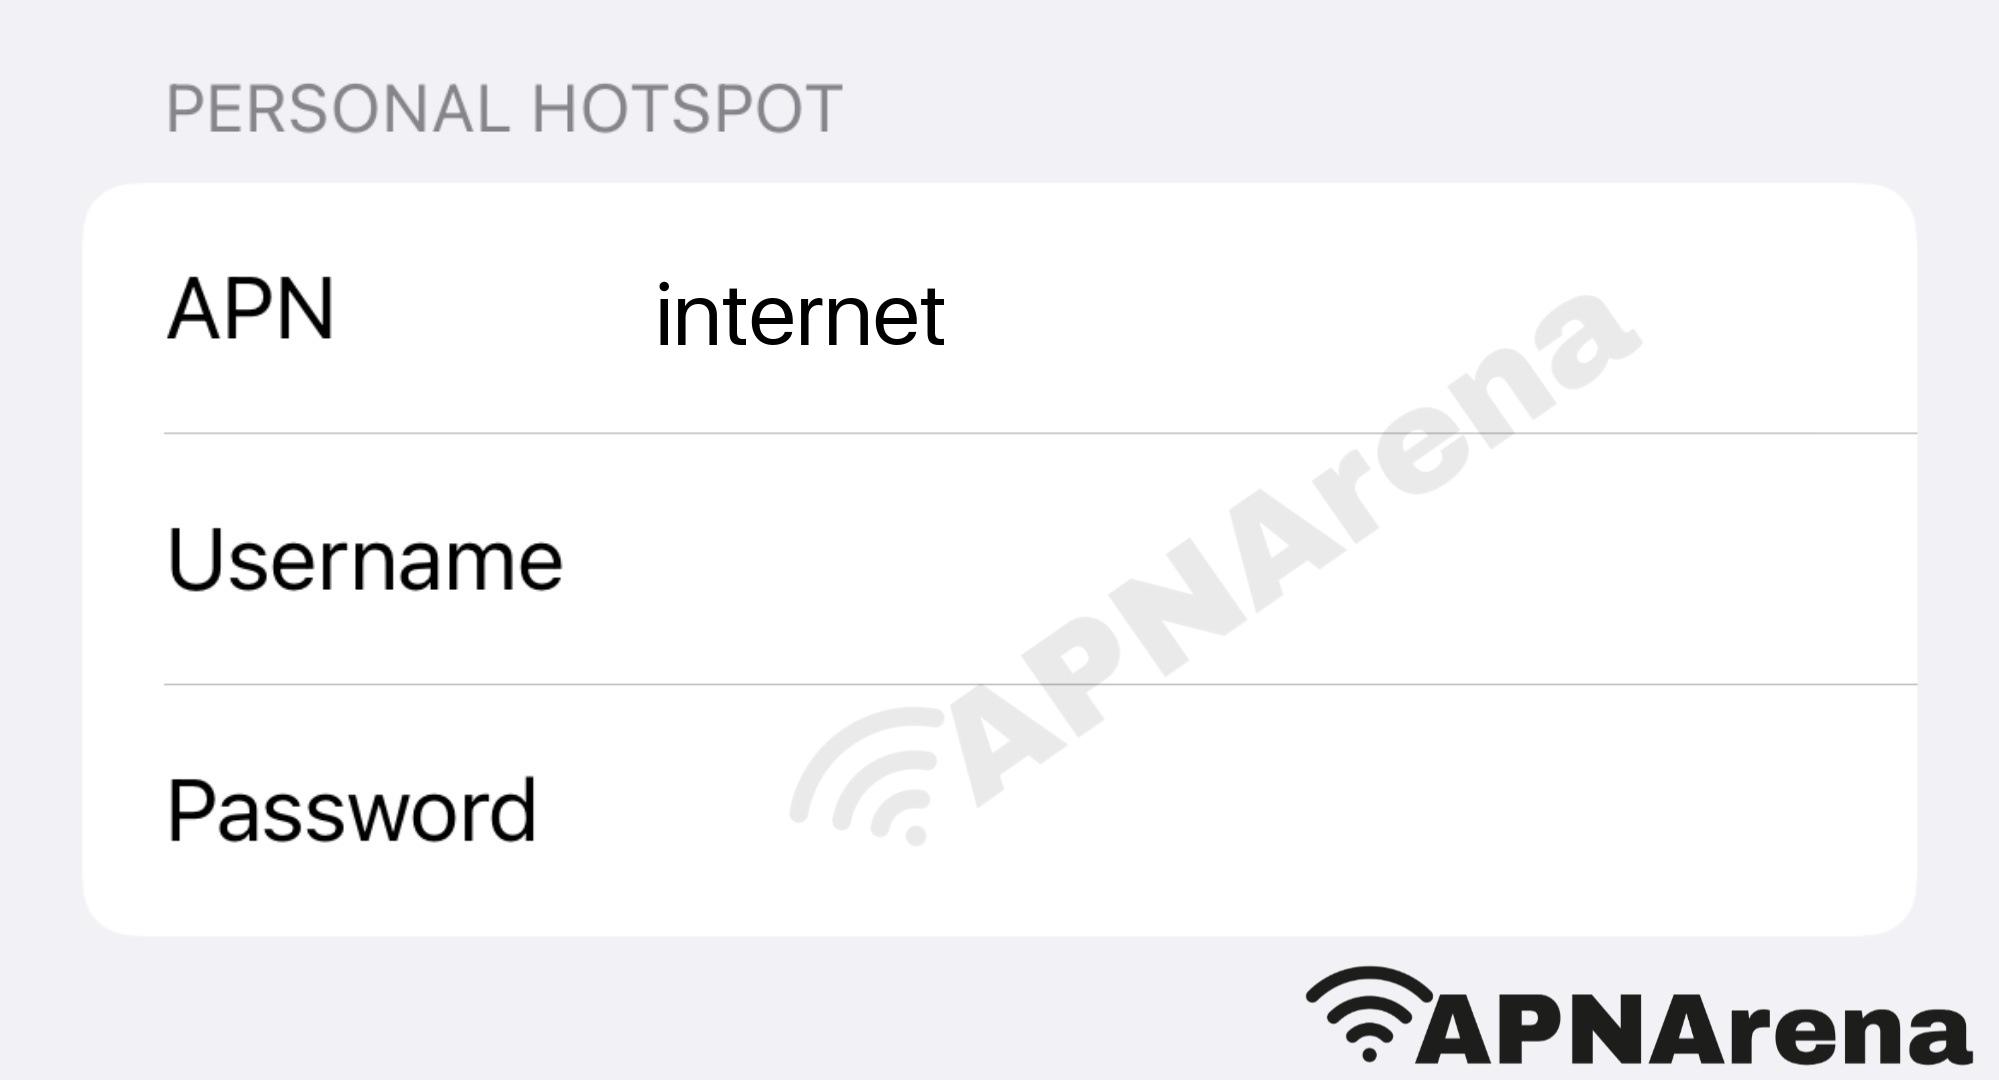 JOi Telecom Personal Hotspot Settings for iPhone